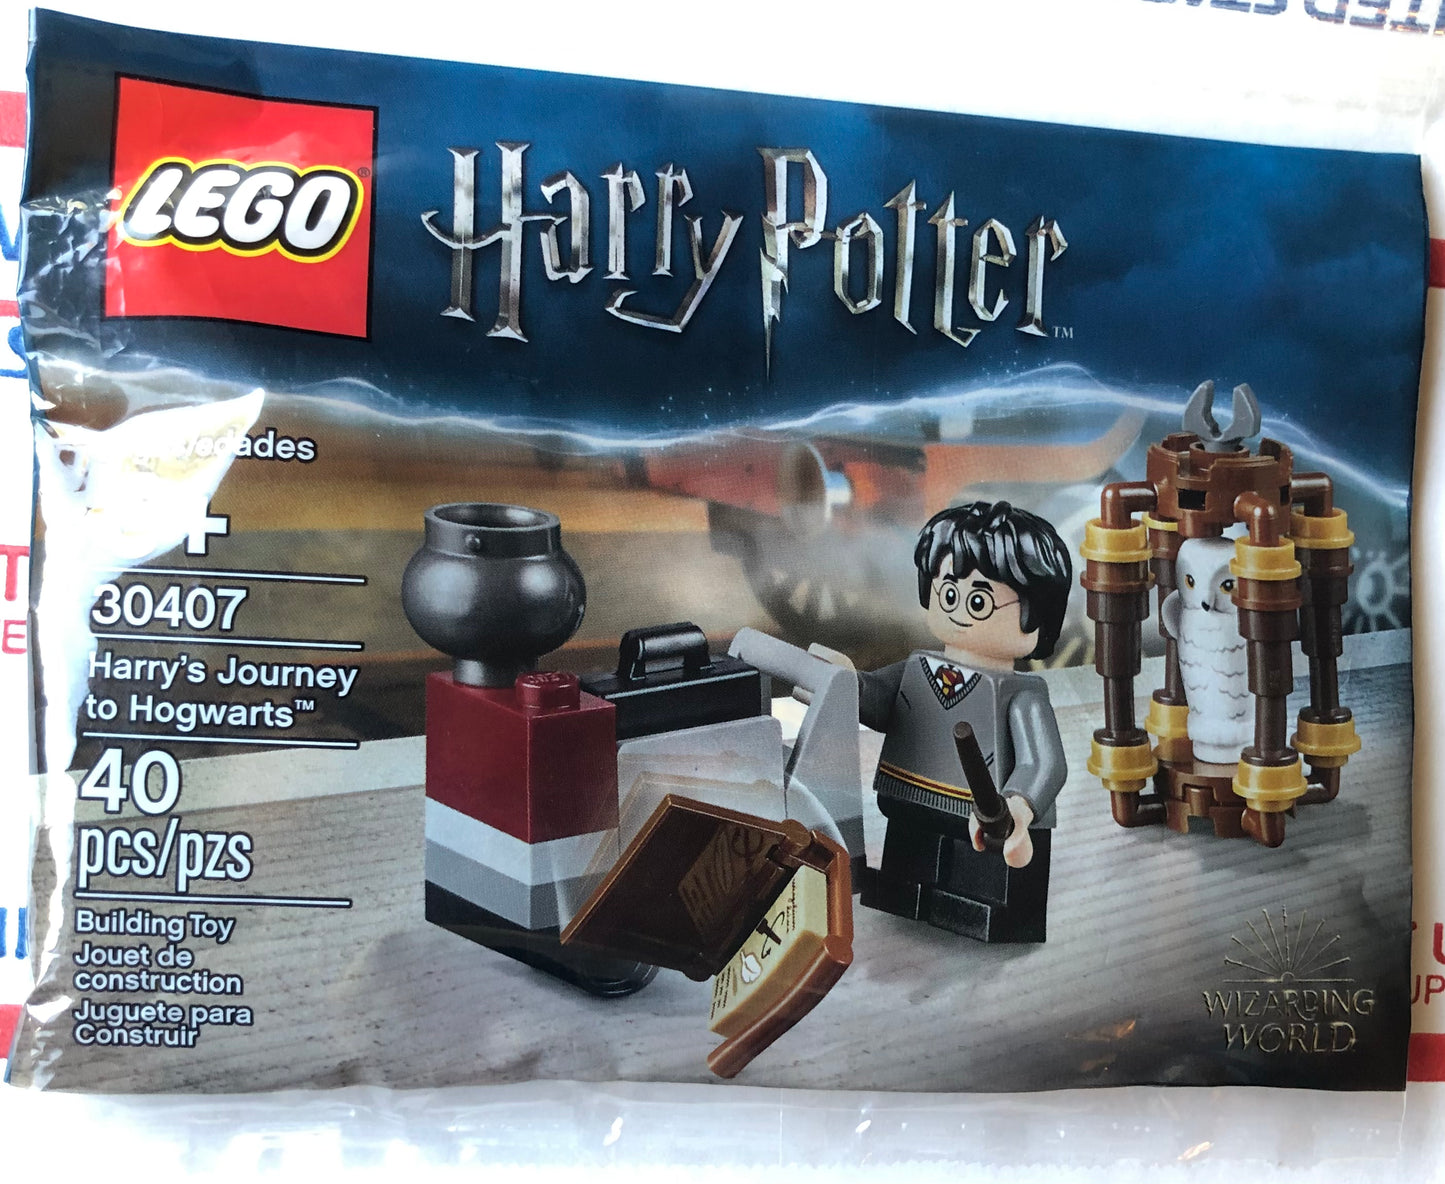 LEGO Polybag Harry Potter Harry's Journey to Hogwarts Set 30407